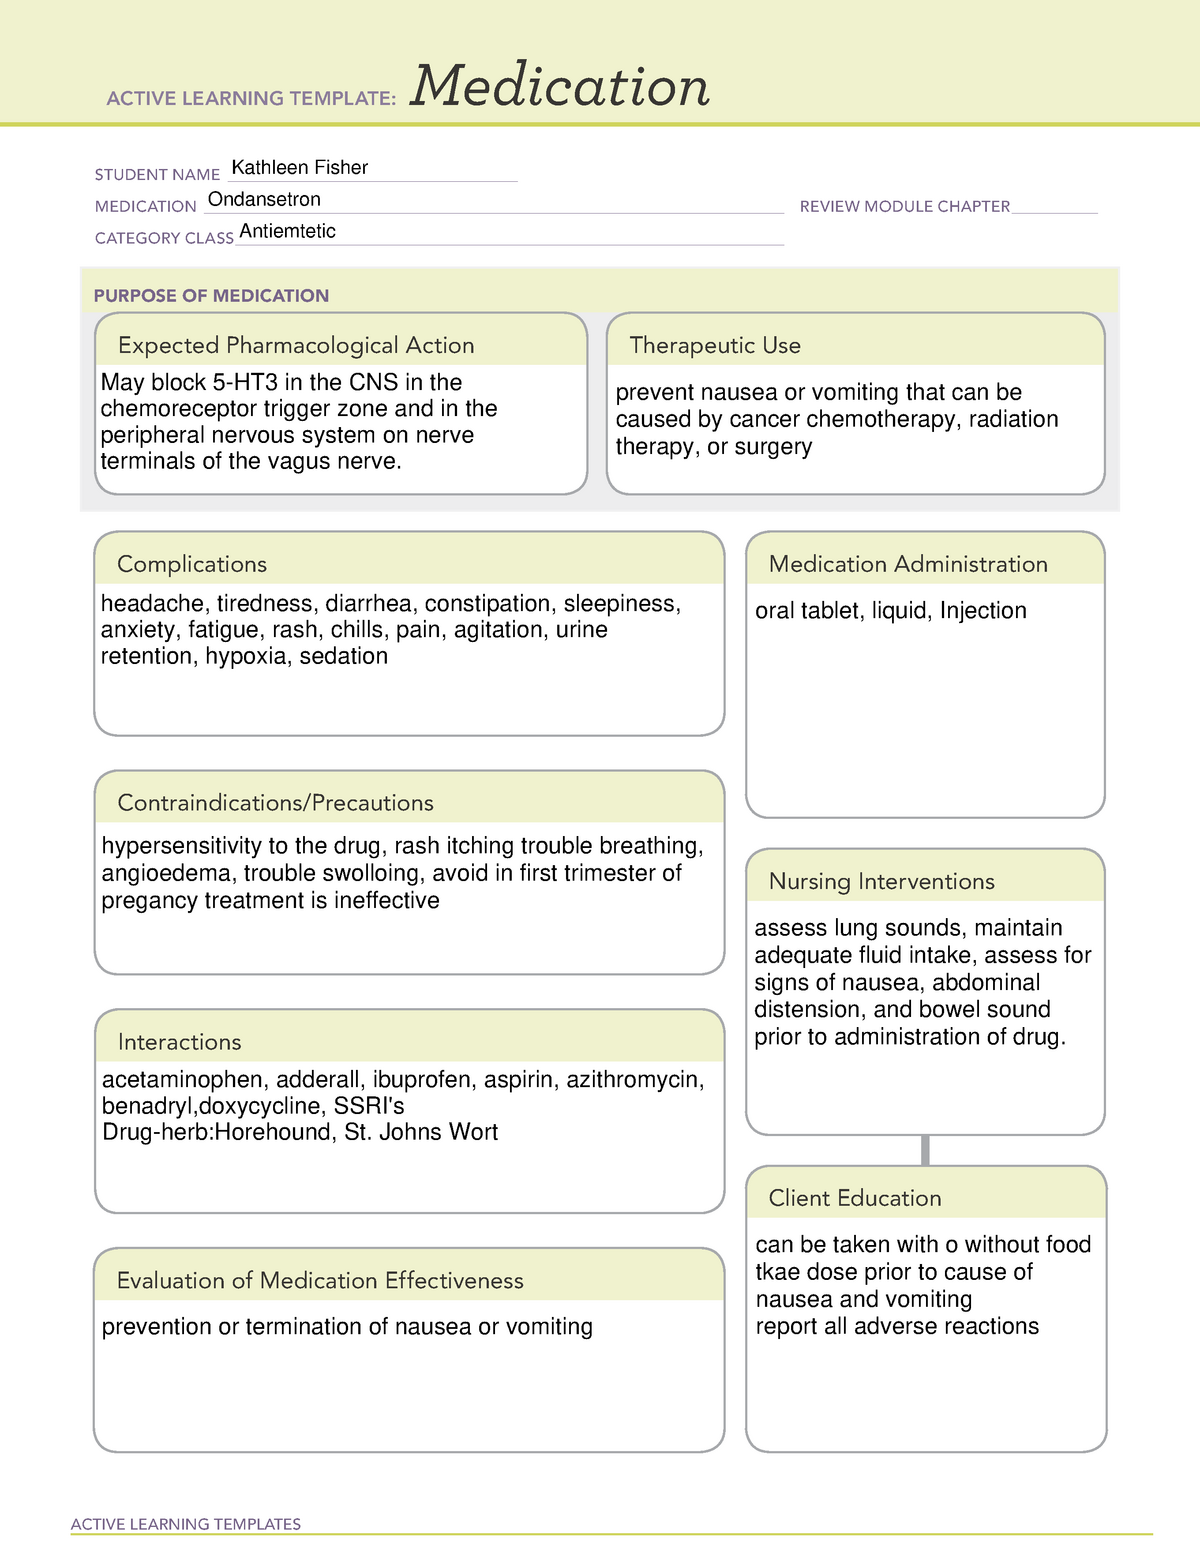 medtemp-ondansetron-ati-medication-system-template-active-learning-templates-medication